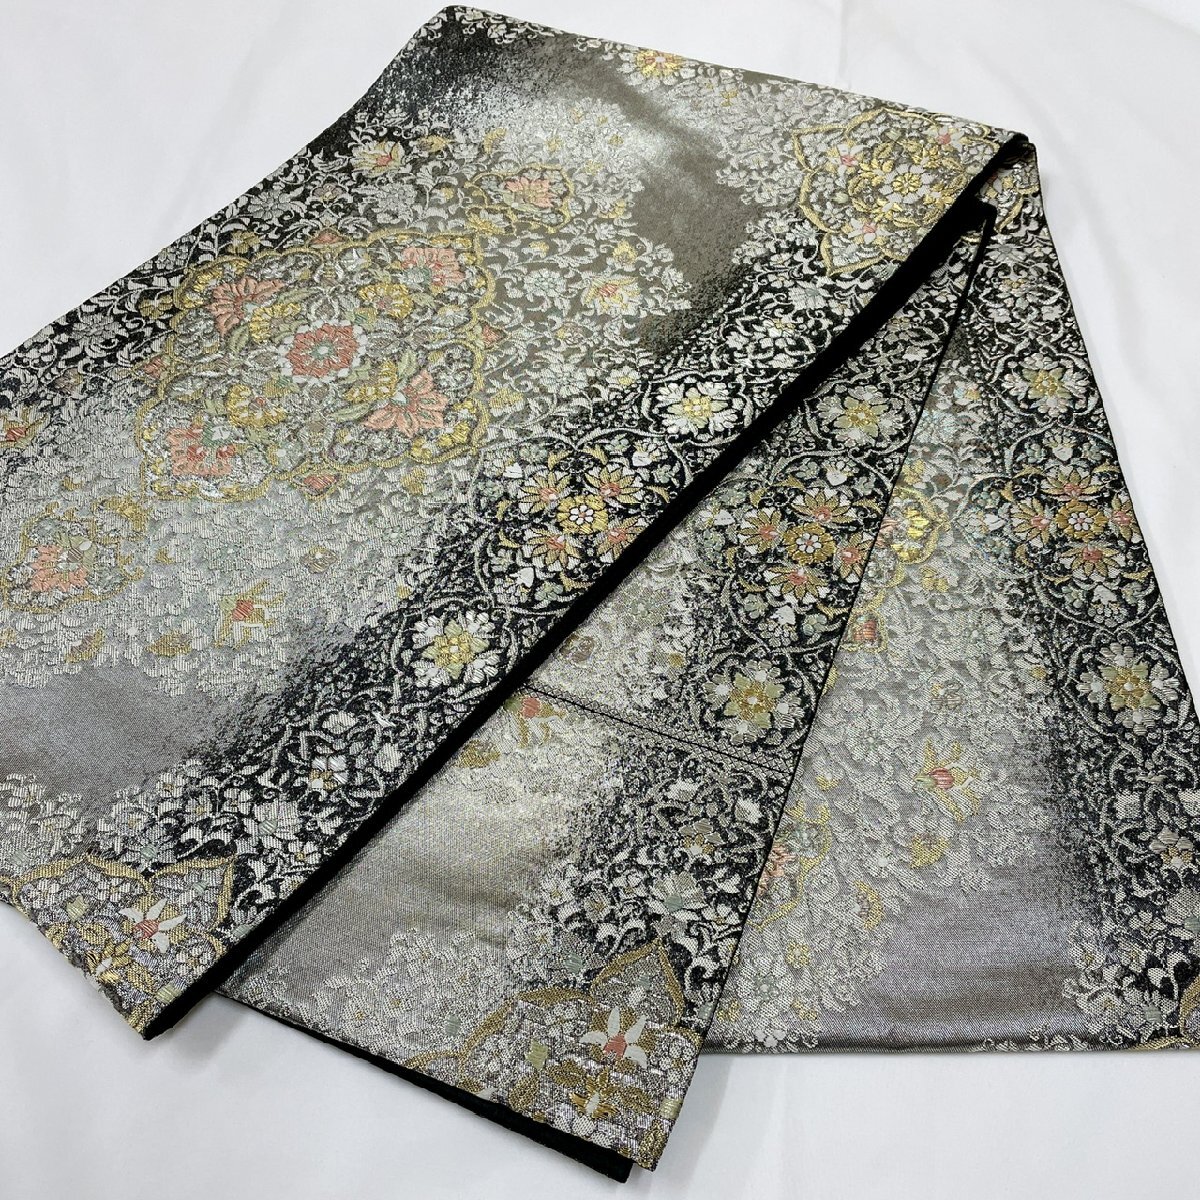  kimono month flower .. equipment ornament . writing sama double-woven obi six through pattern silk gold silver thread ob1625